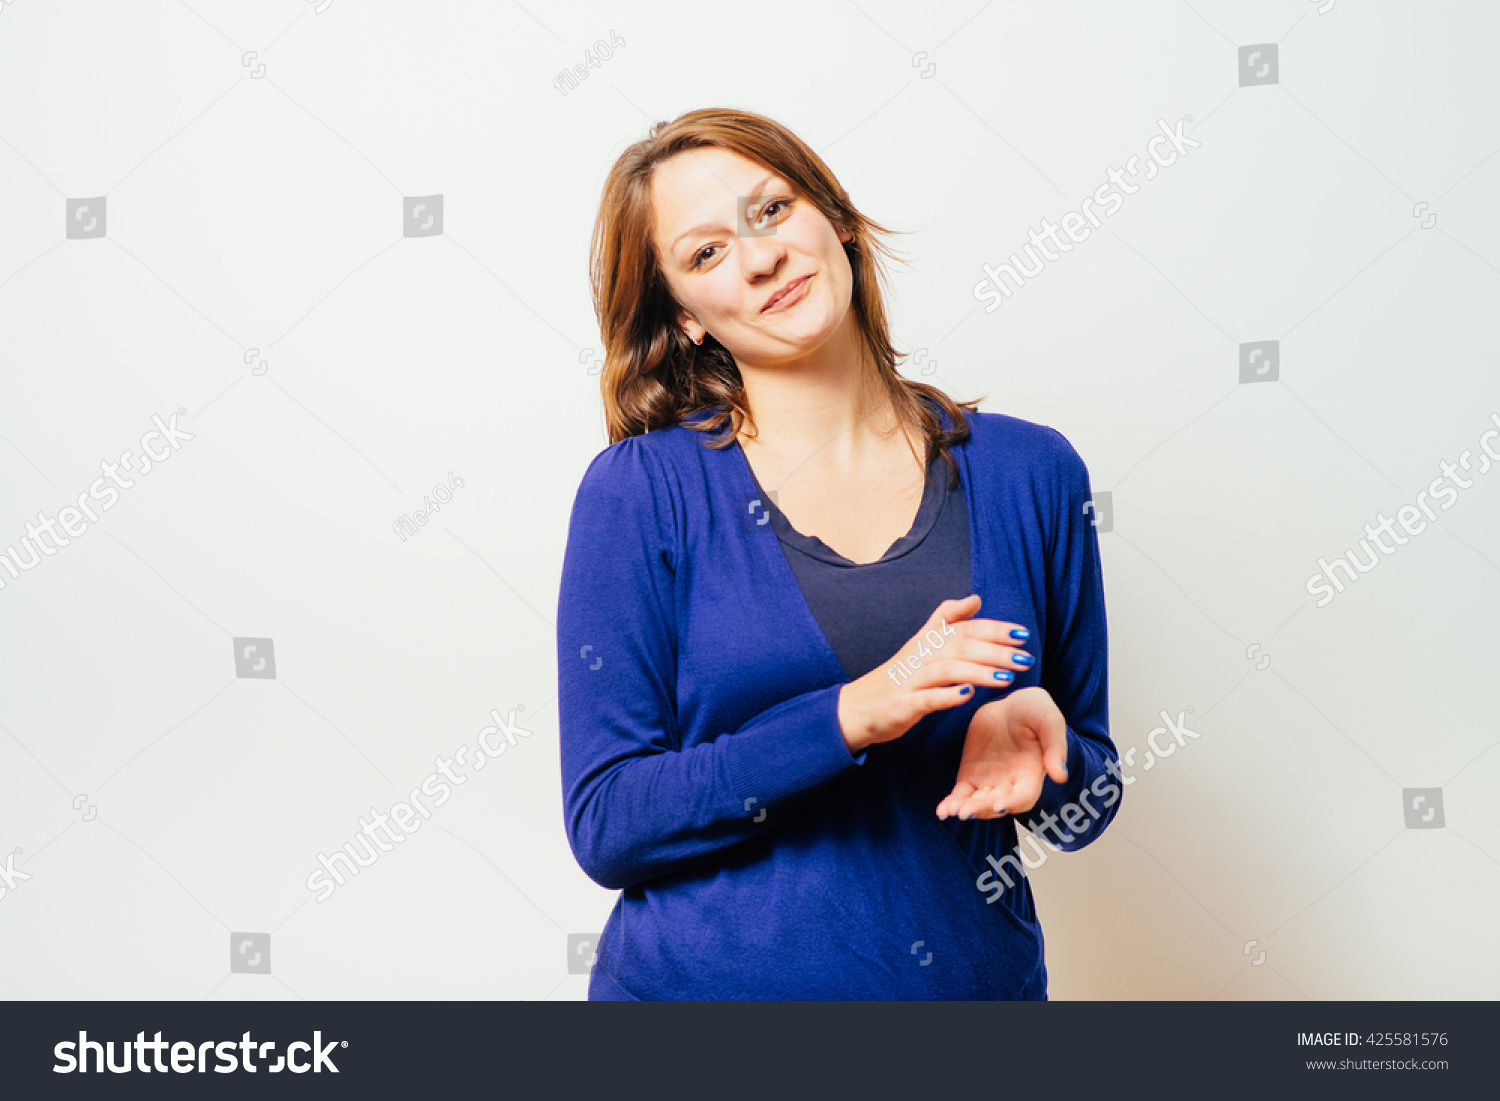 Woman Claps Applauding Stock Photo 425581576 | Shutterstock